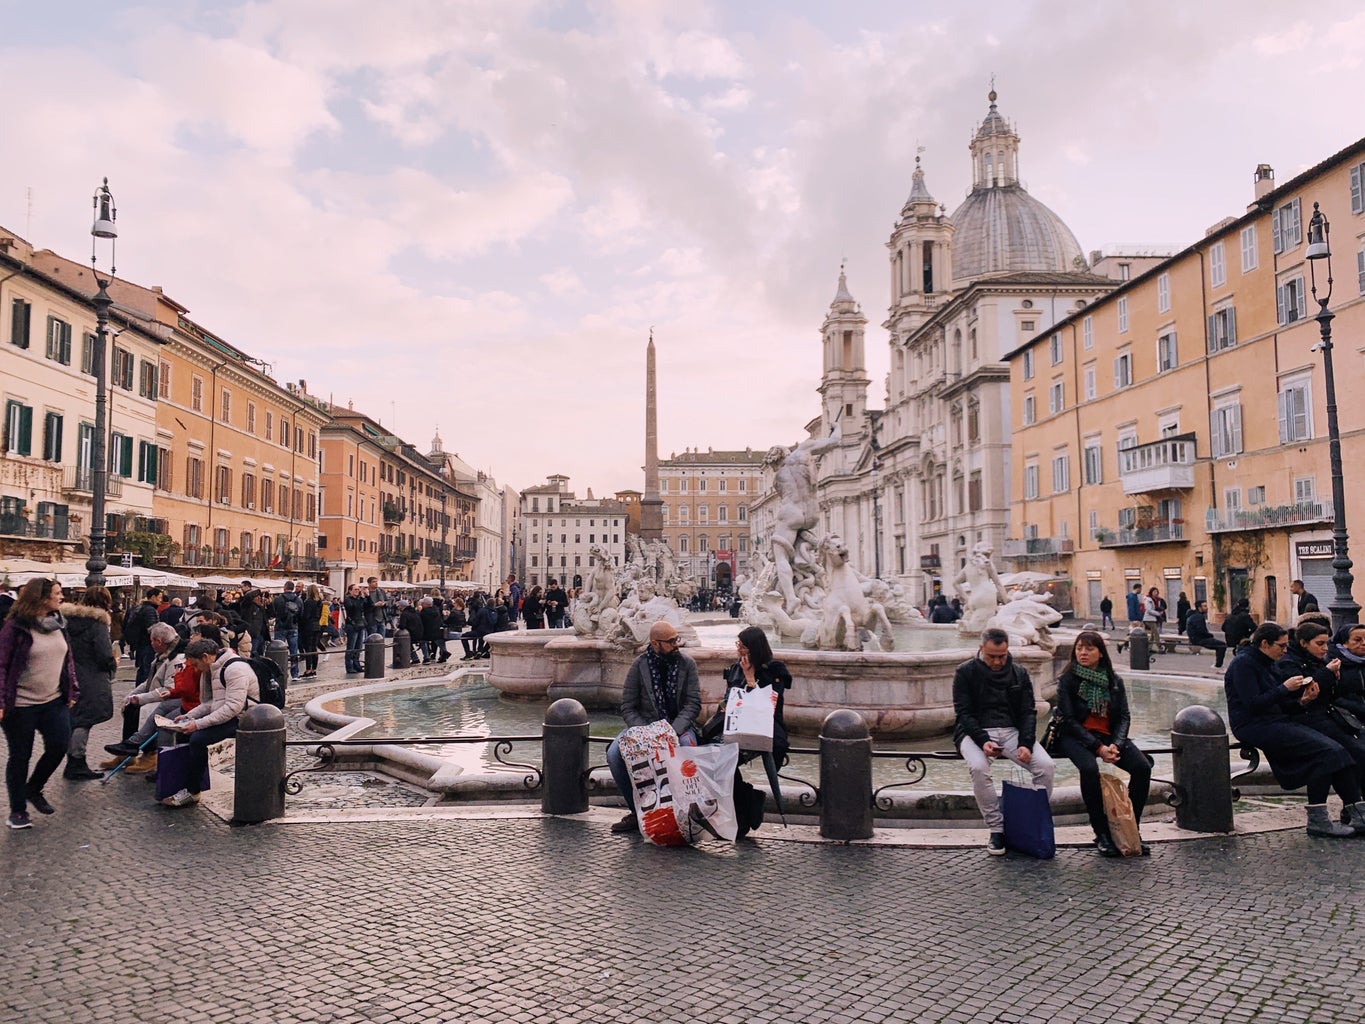 Fountain in Rome, Italy